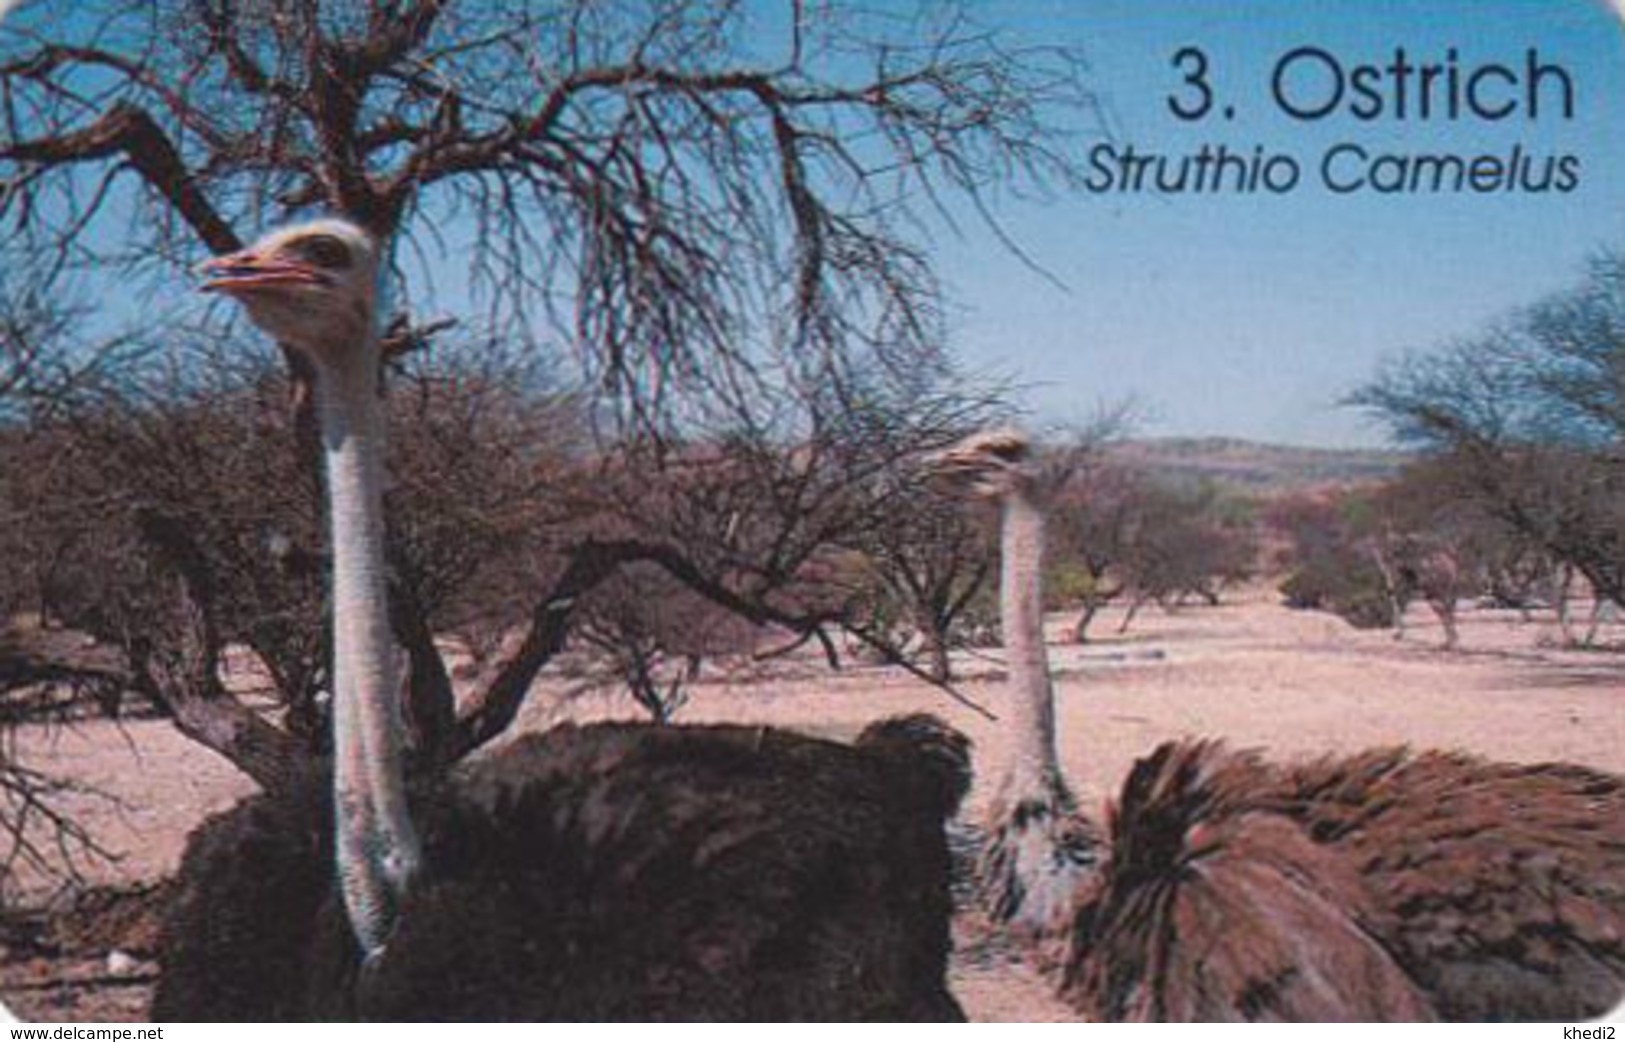 Télécarte à Puce NAMIBIE - Animal - Oiseau - AUTRUCHE - OSTRICH Bird NAMIBIA Chip Phonecard - STRAUSS Vogel - 4511 - Namibie